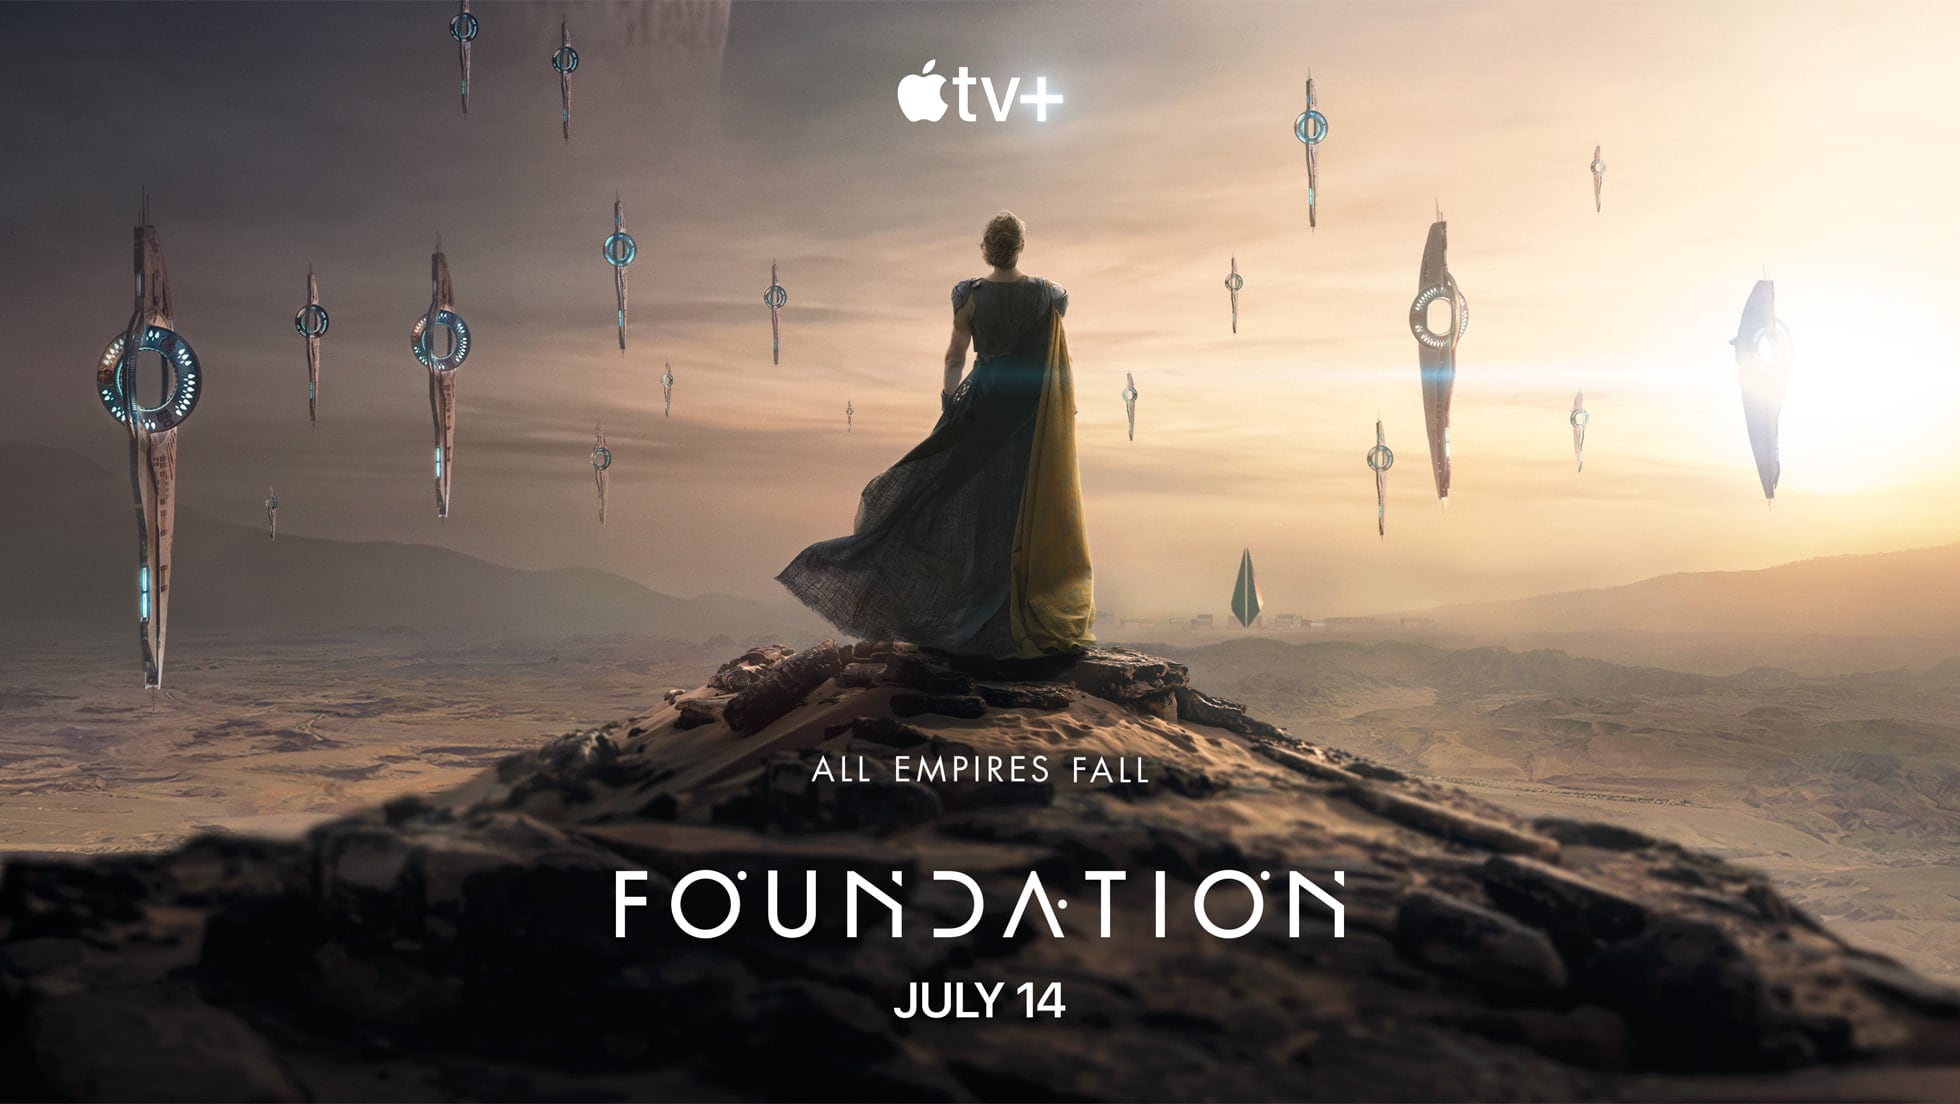 Epic Foundation season 2 trailer goes supernova